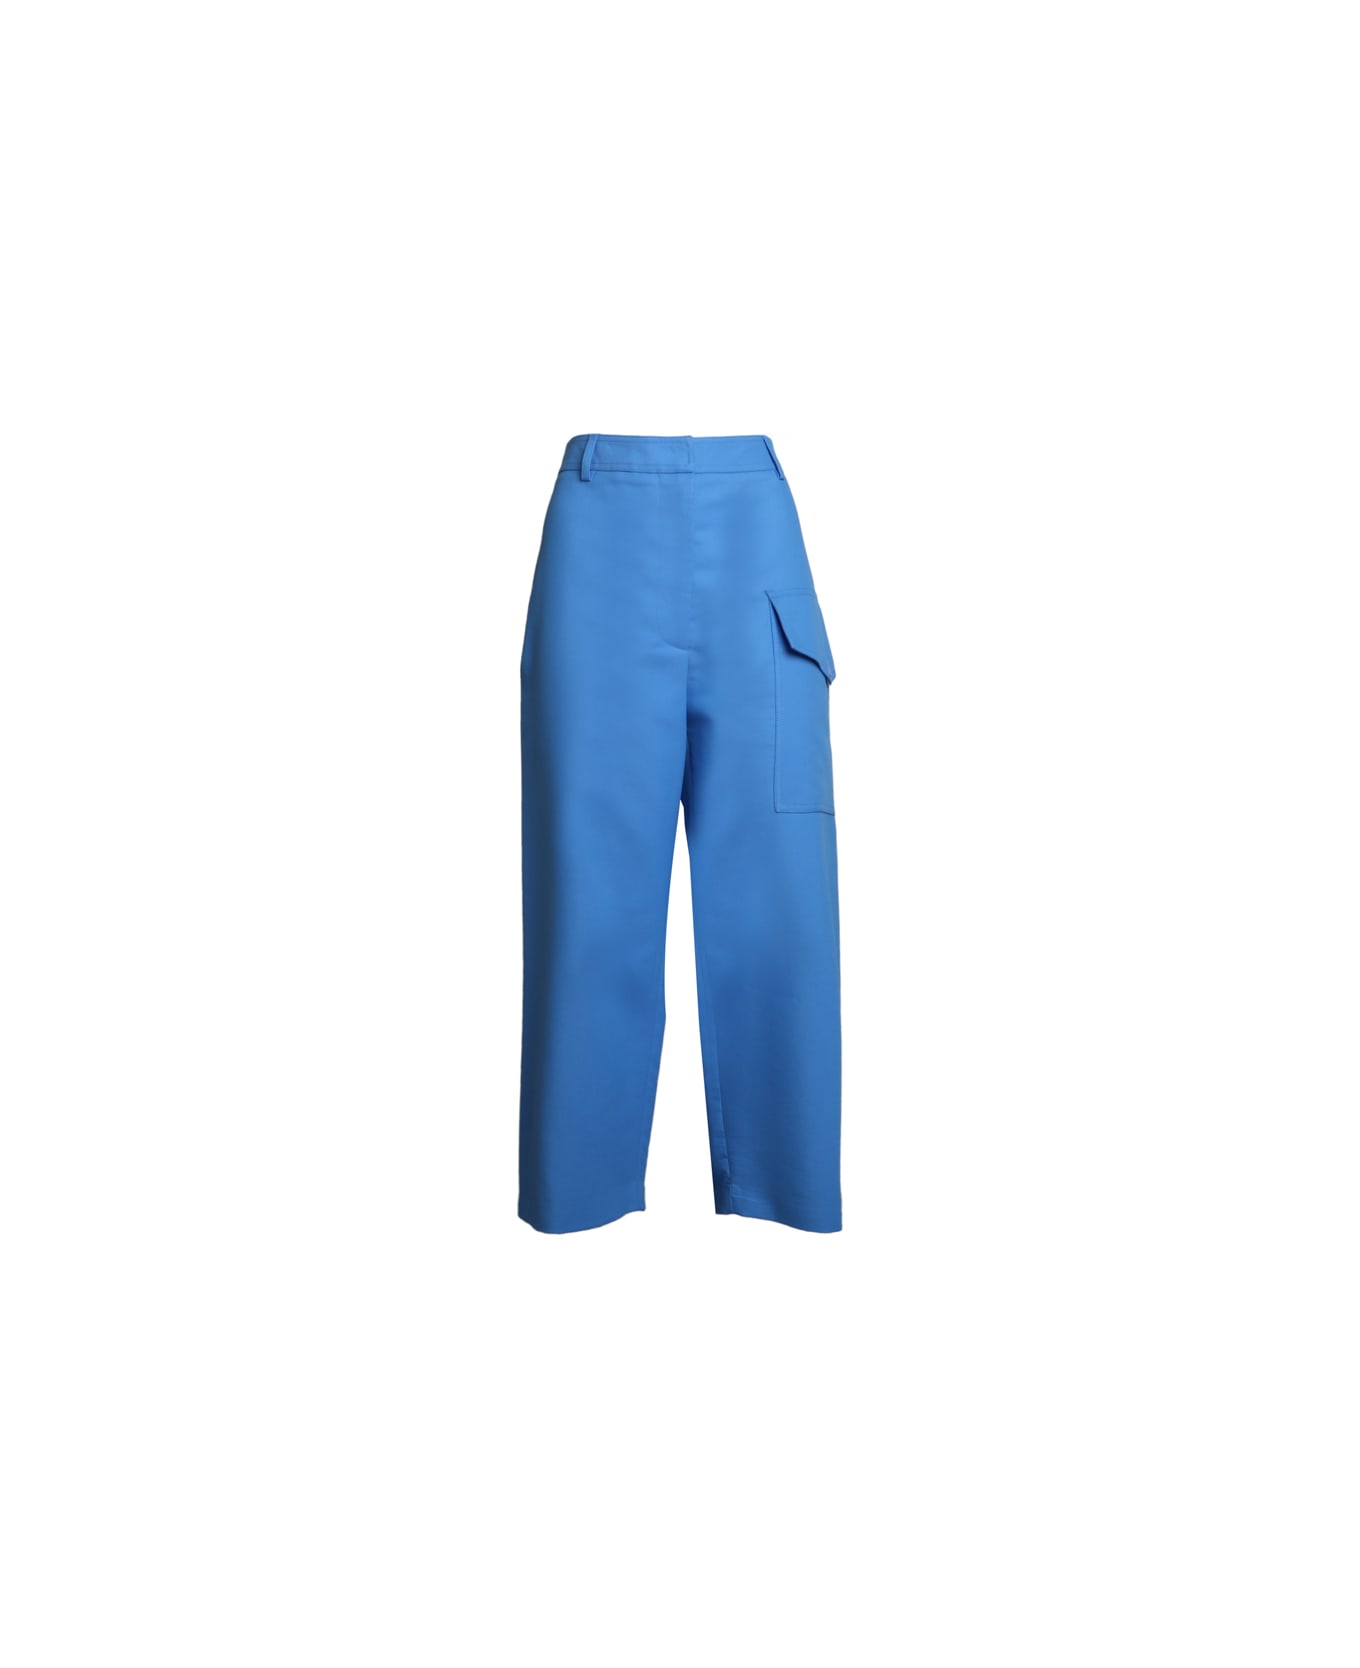 Stella McCartney Cropped Cotton Trousers - Cornflower blue